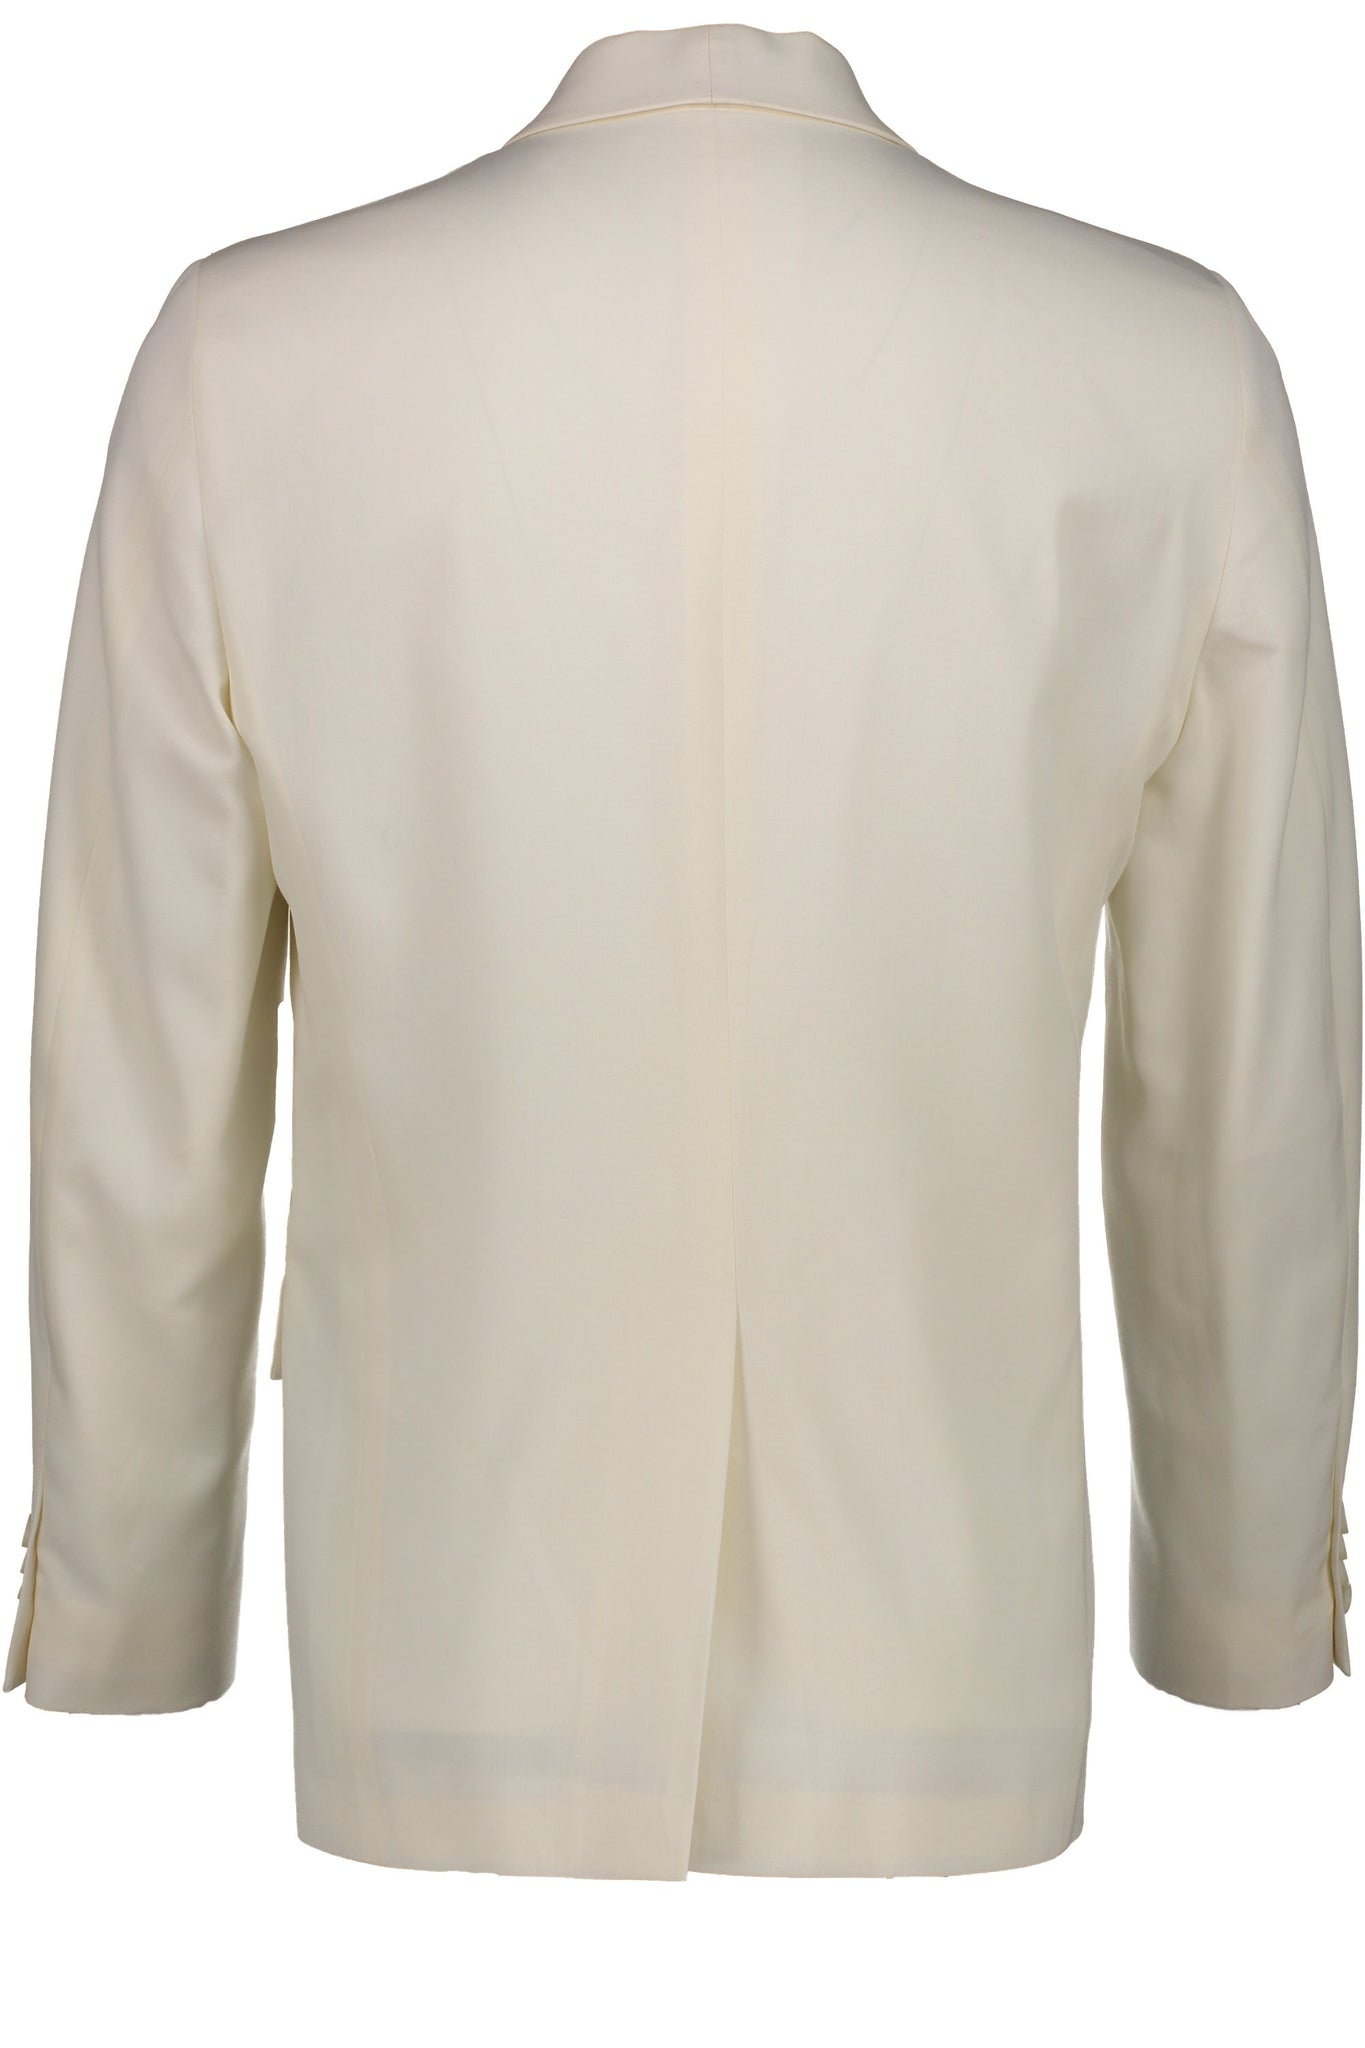 Classic Fit Ivory Wool Dinner Jacket with Cream Satin Shawl Collar -  Hardwick.com